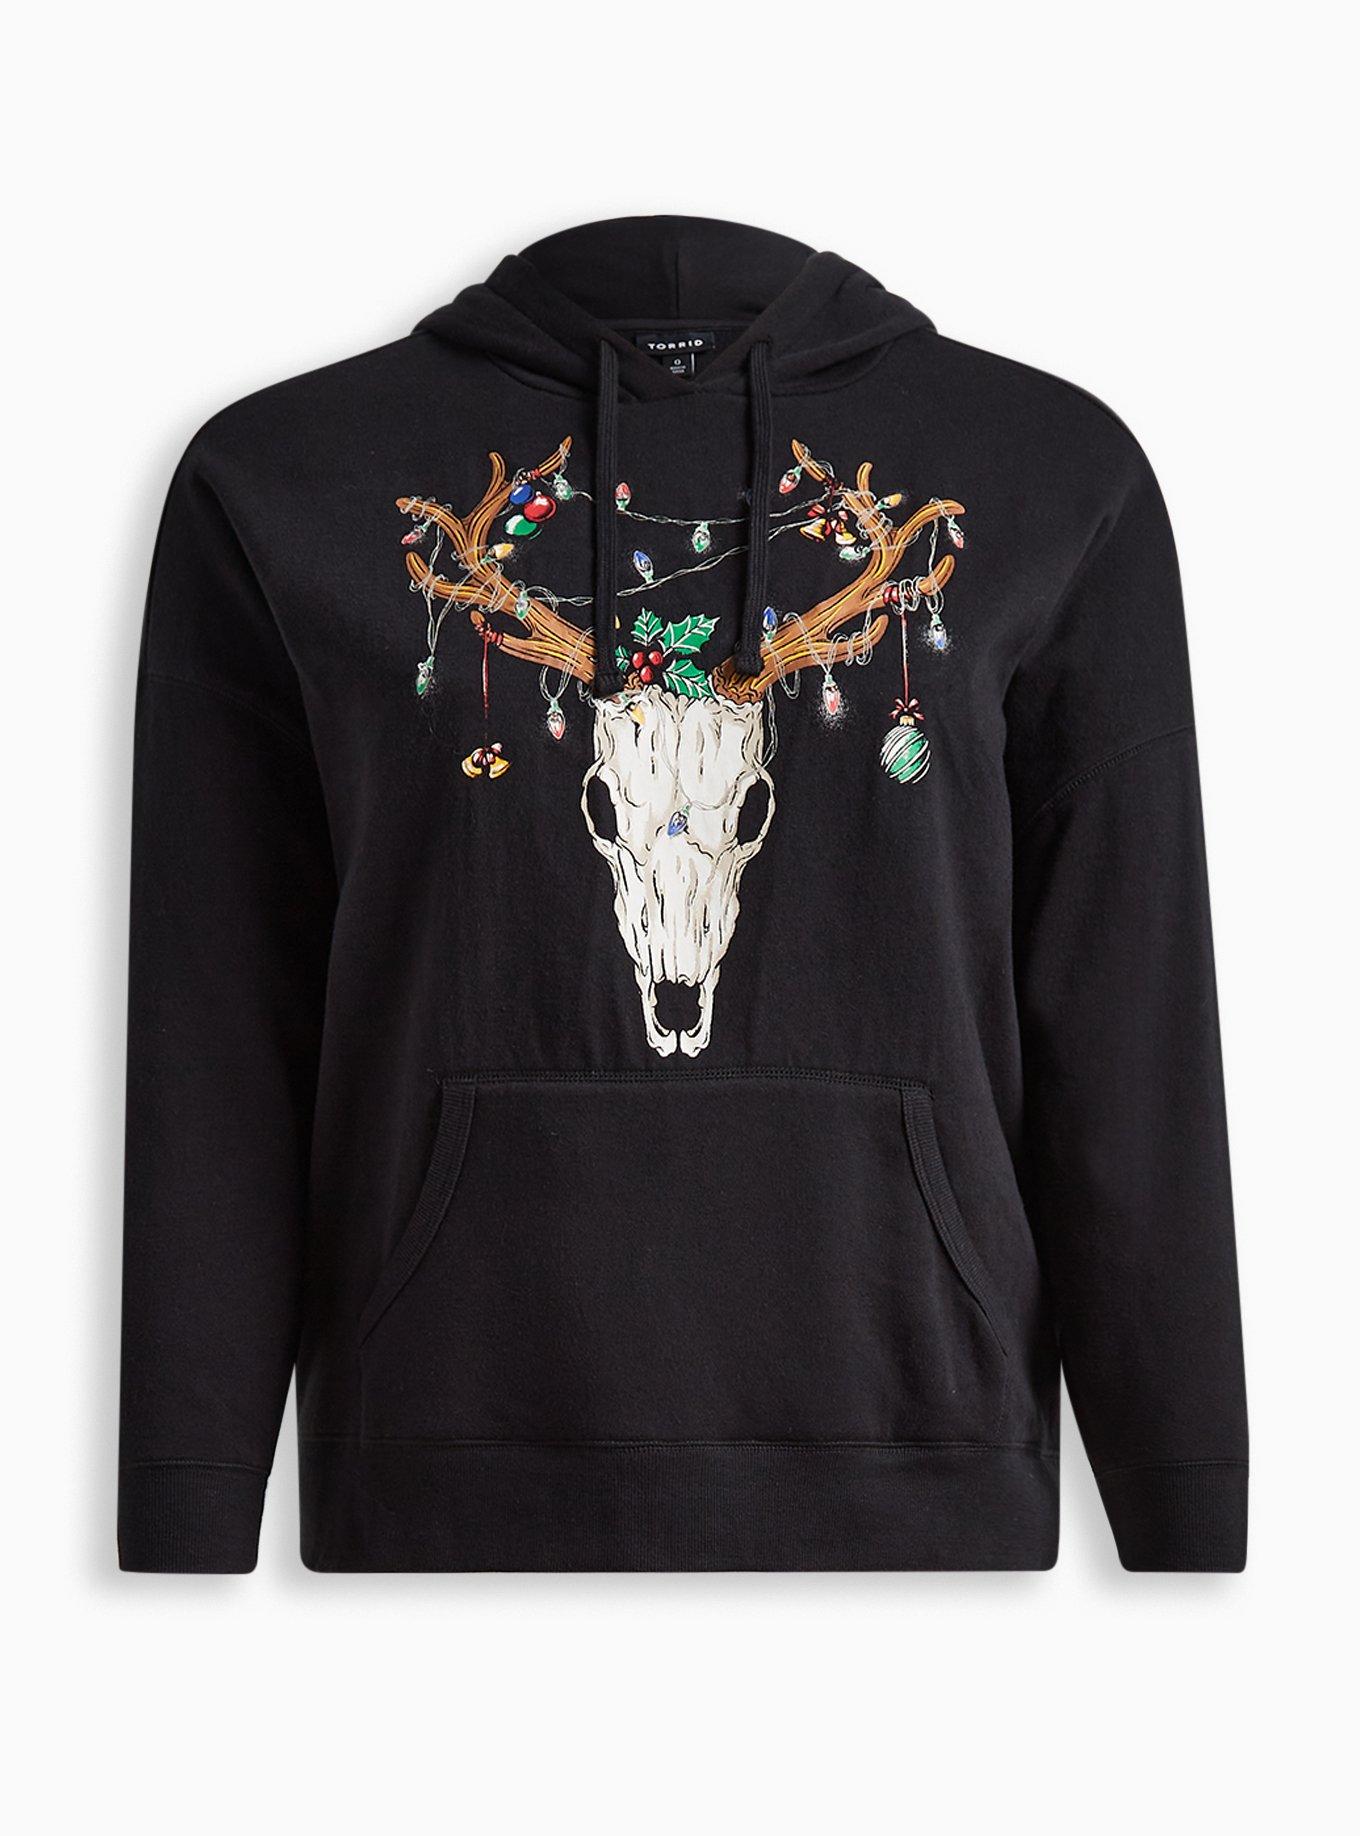 Plus Size - Reindeer - Fit Relaxed Skull Hoodie Torrid Cozy Fleece Light